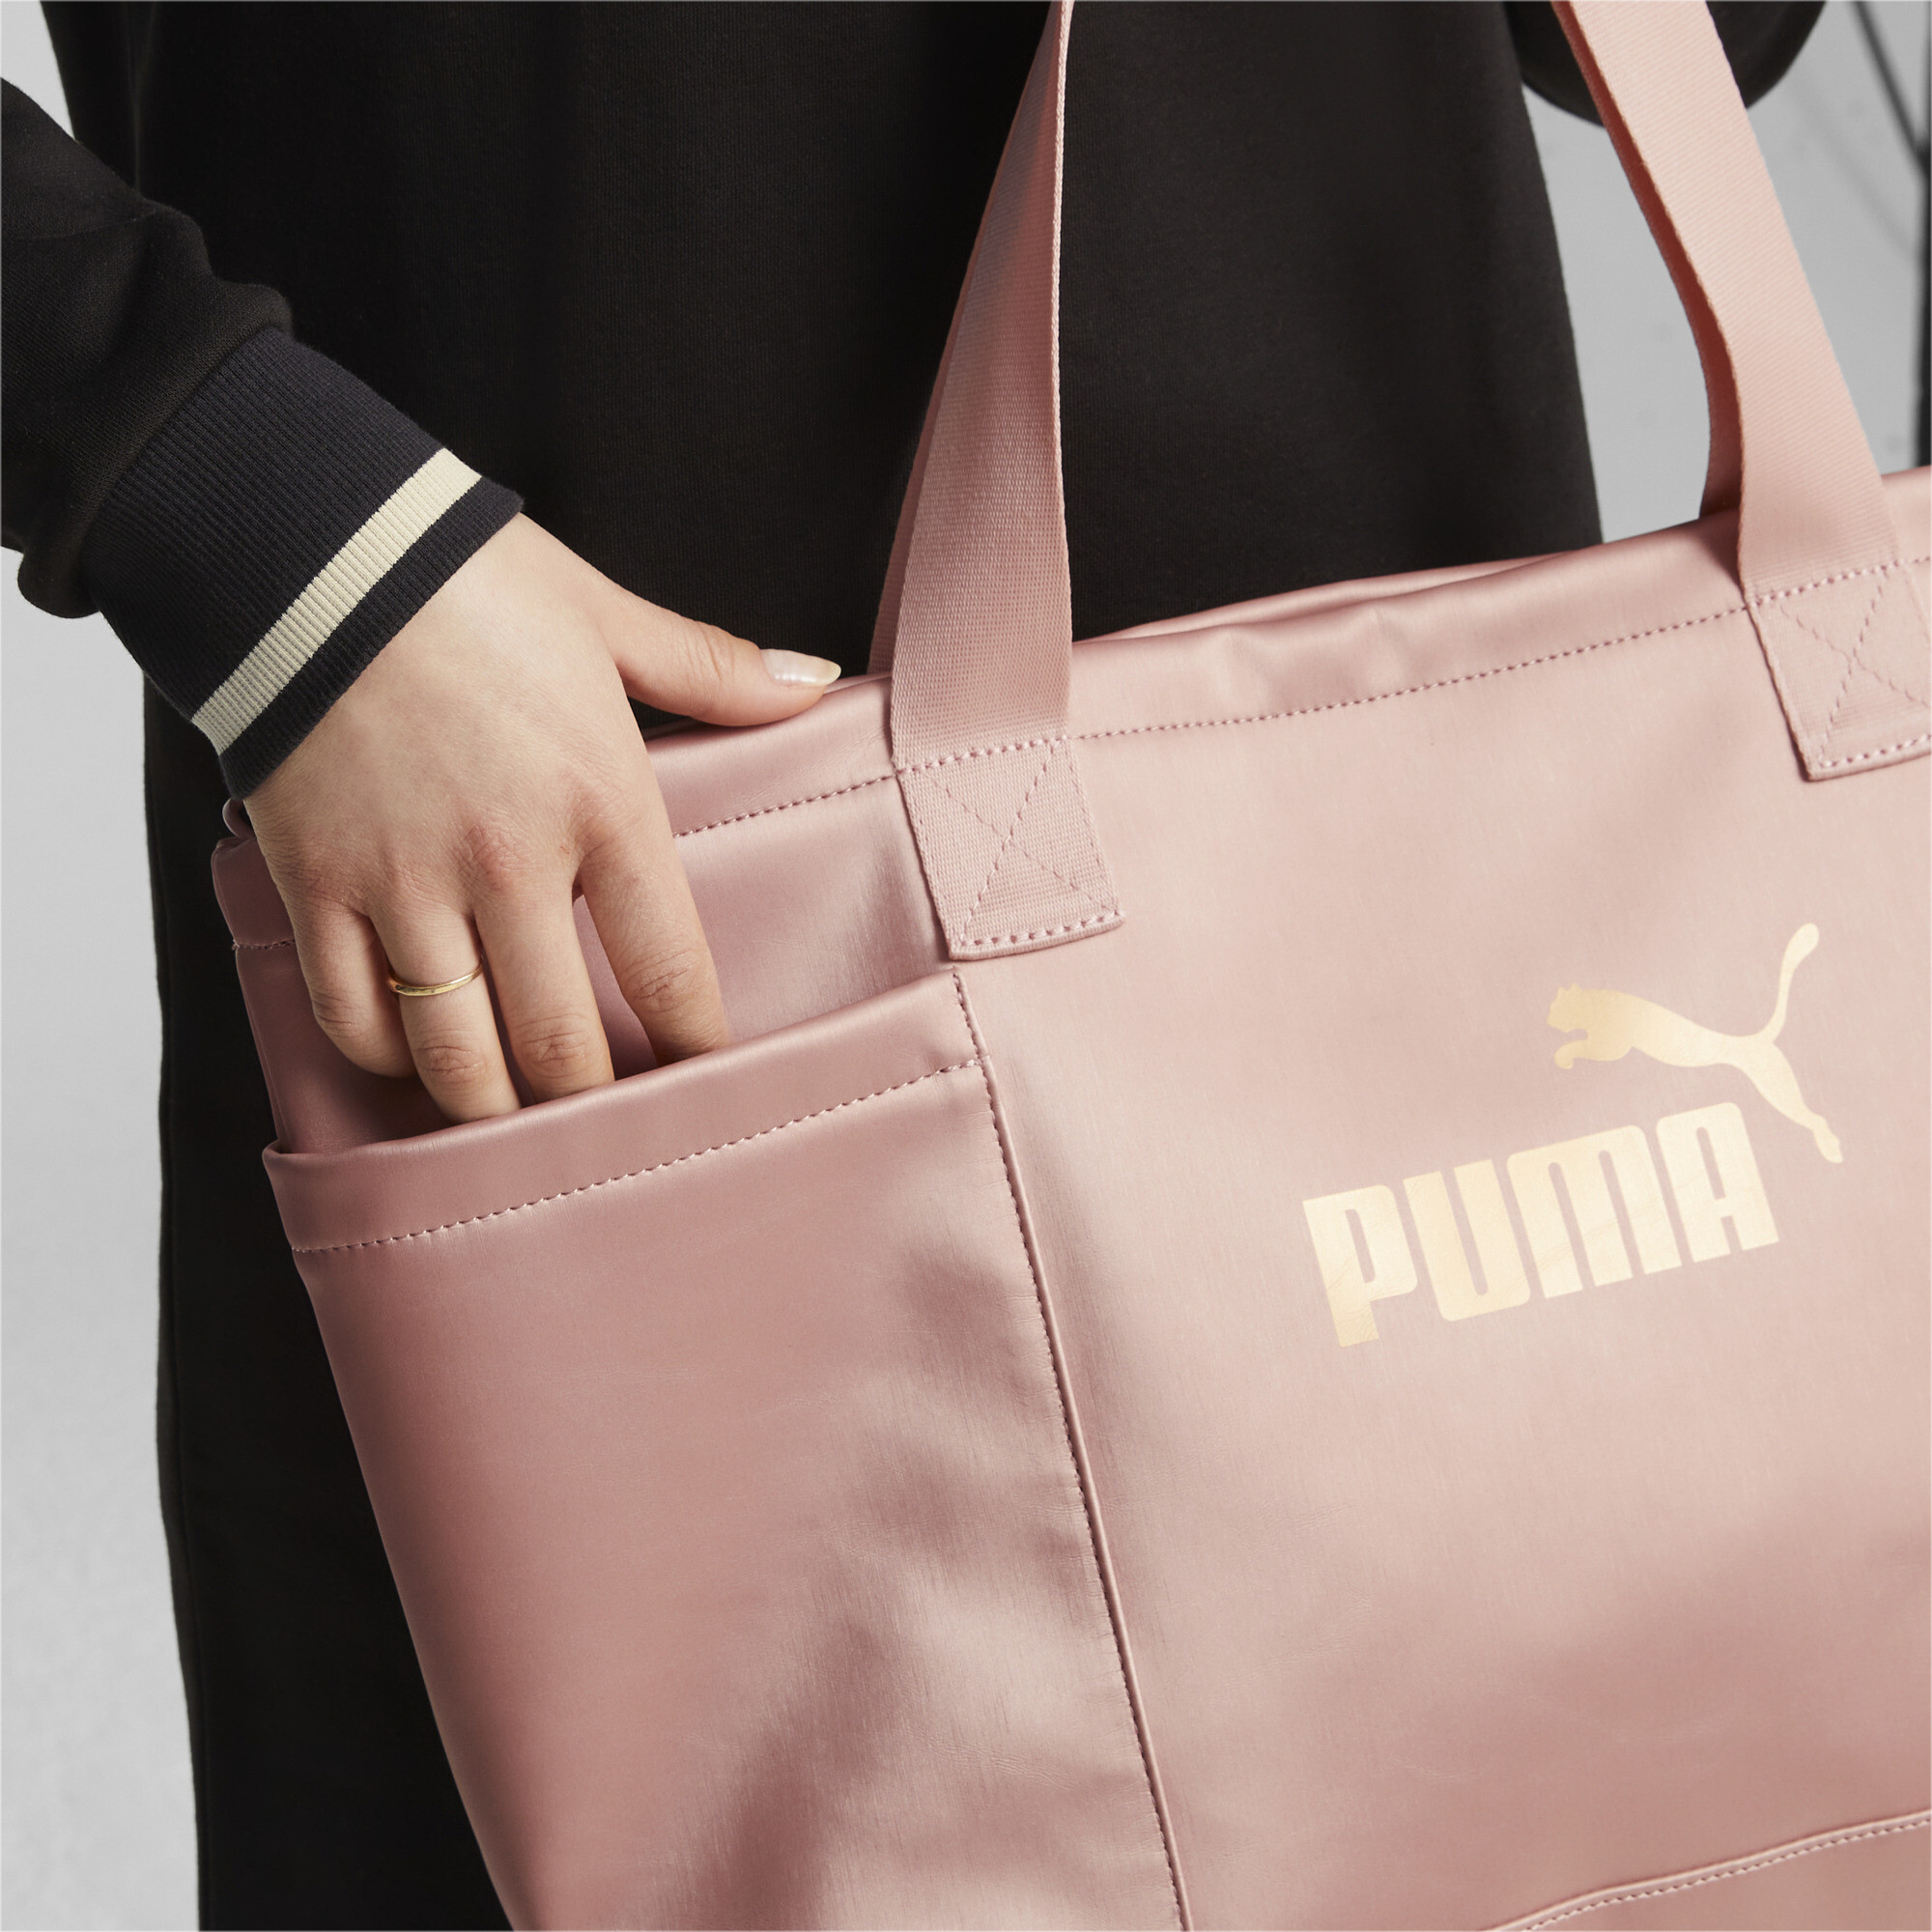 Women's Puma Core Up Large Shopper Bag, Pink, Accessories